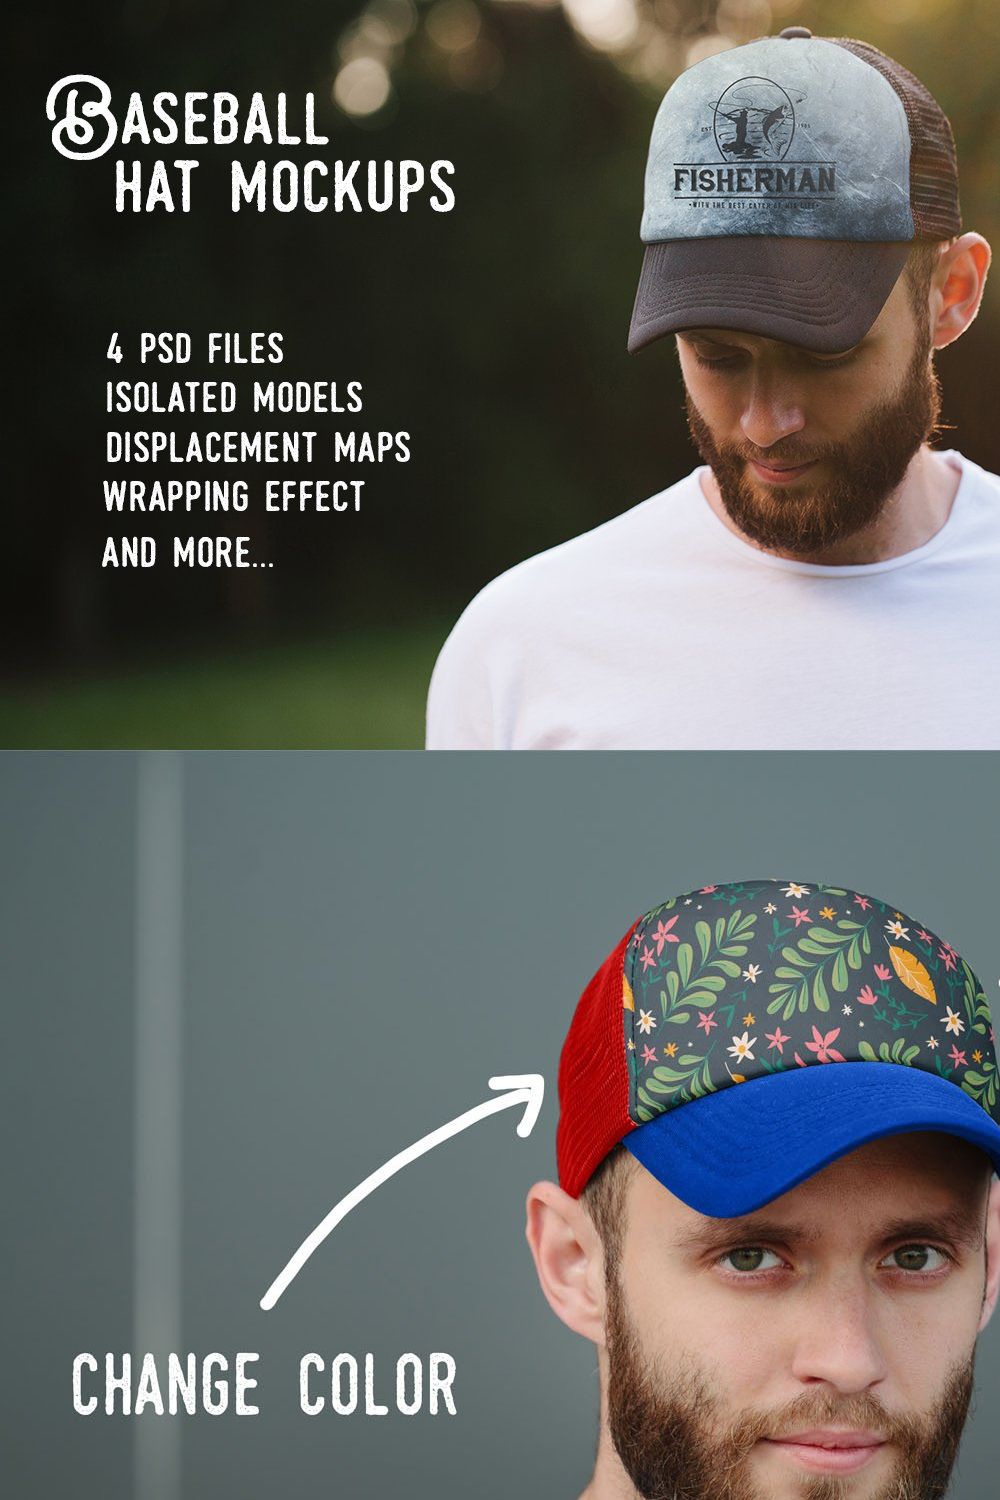 Baseball hat mock up pinterest preview image.